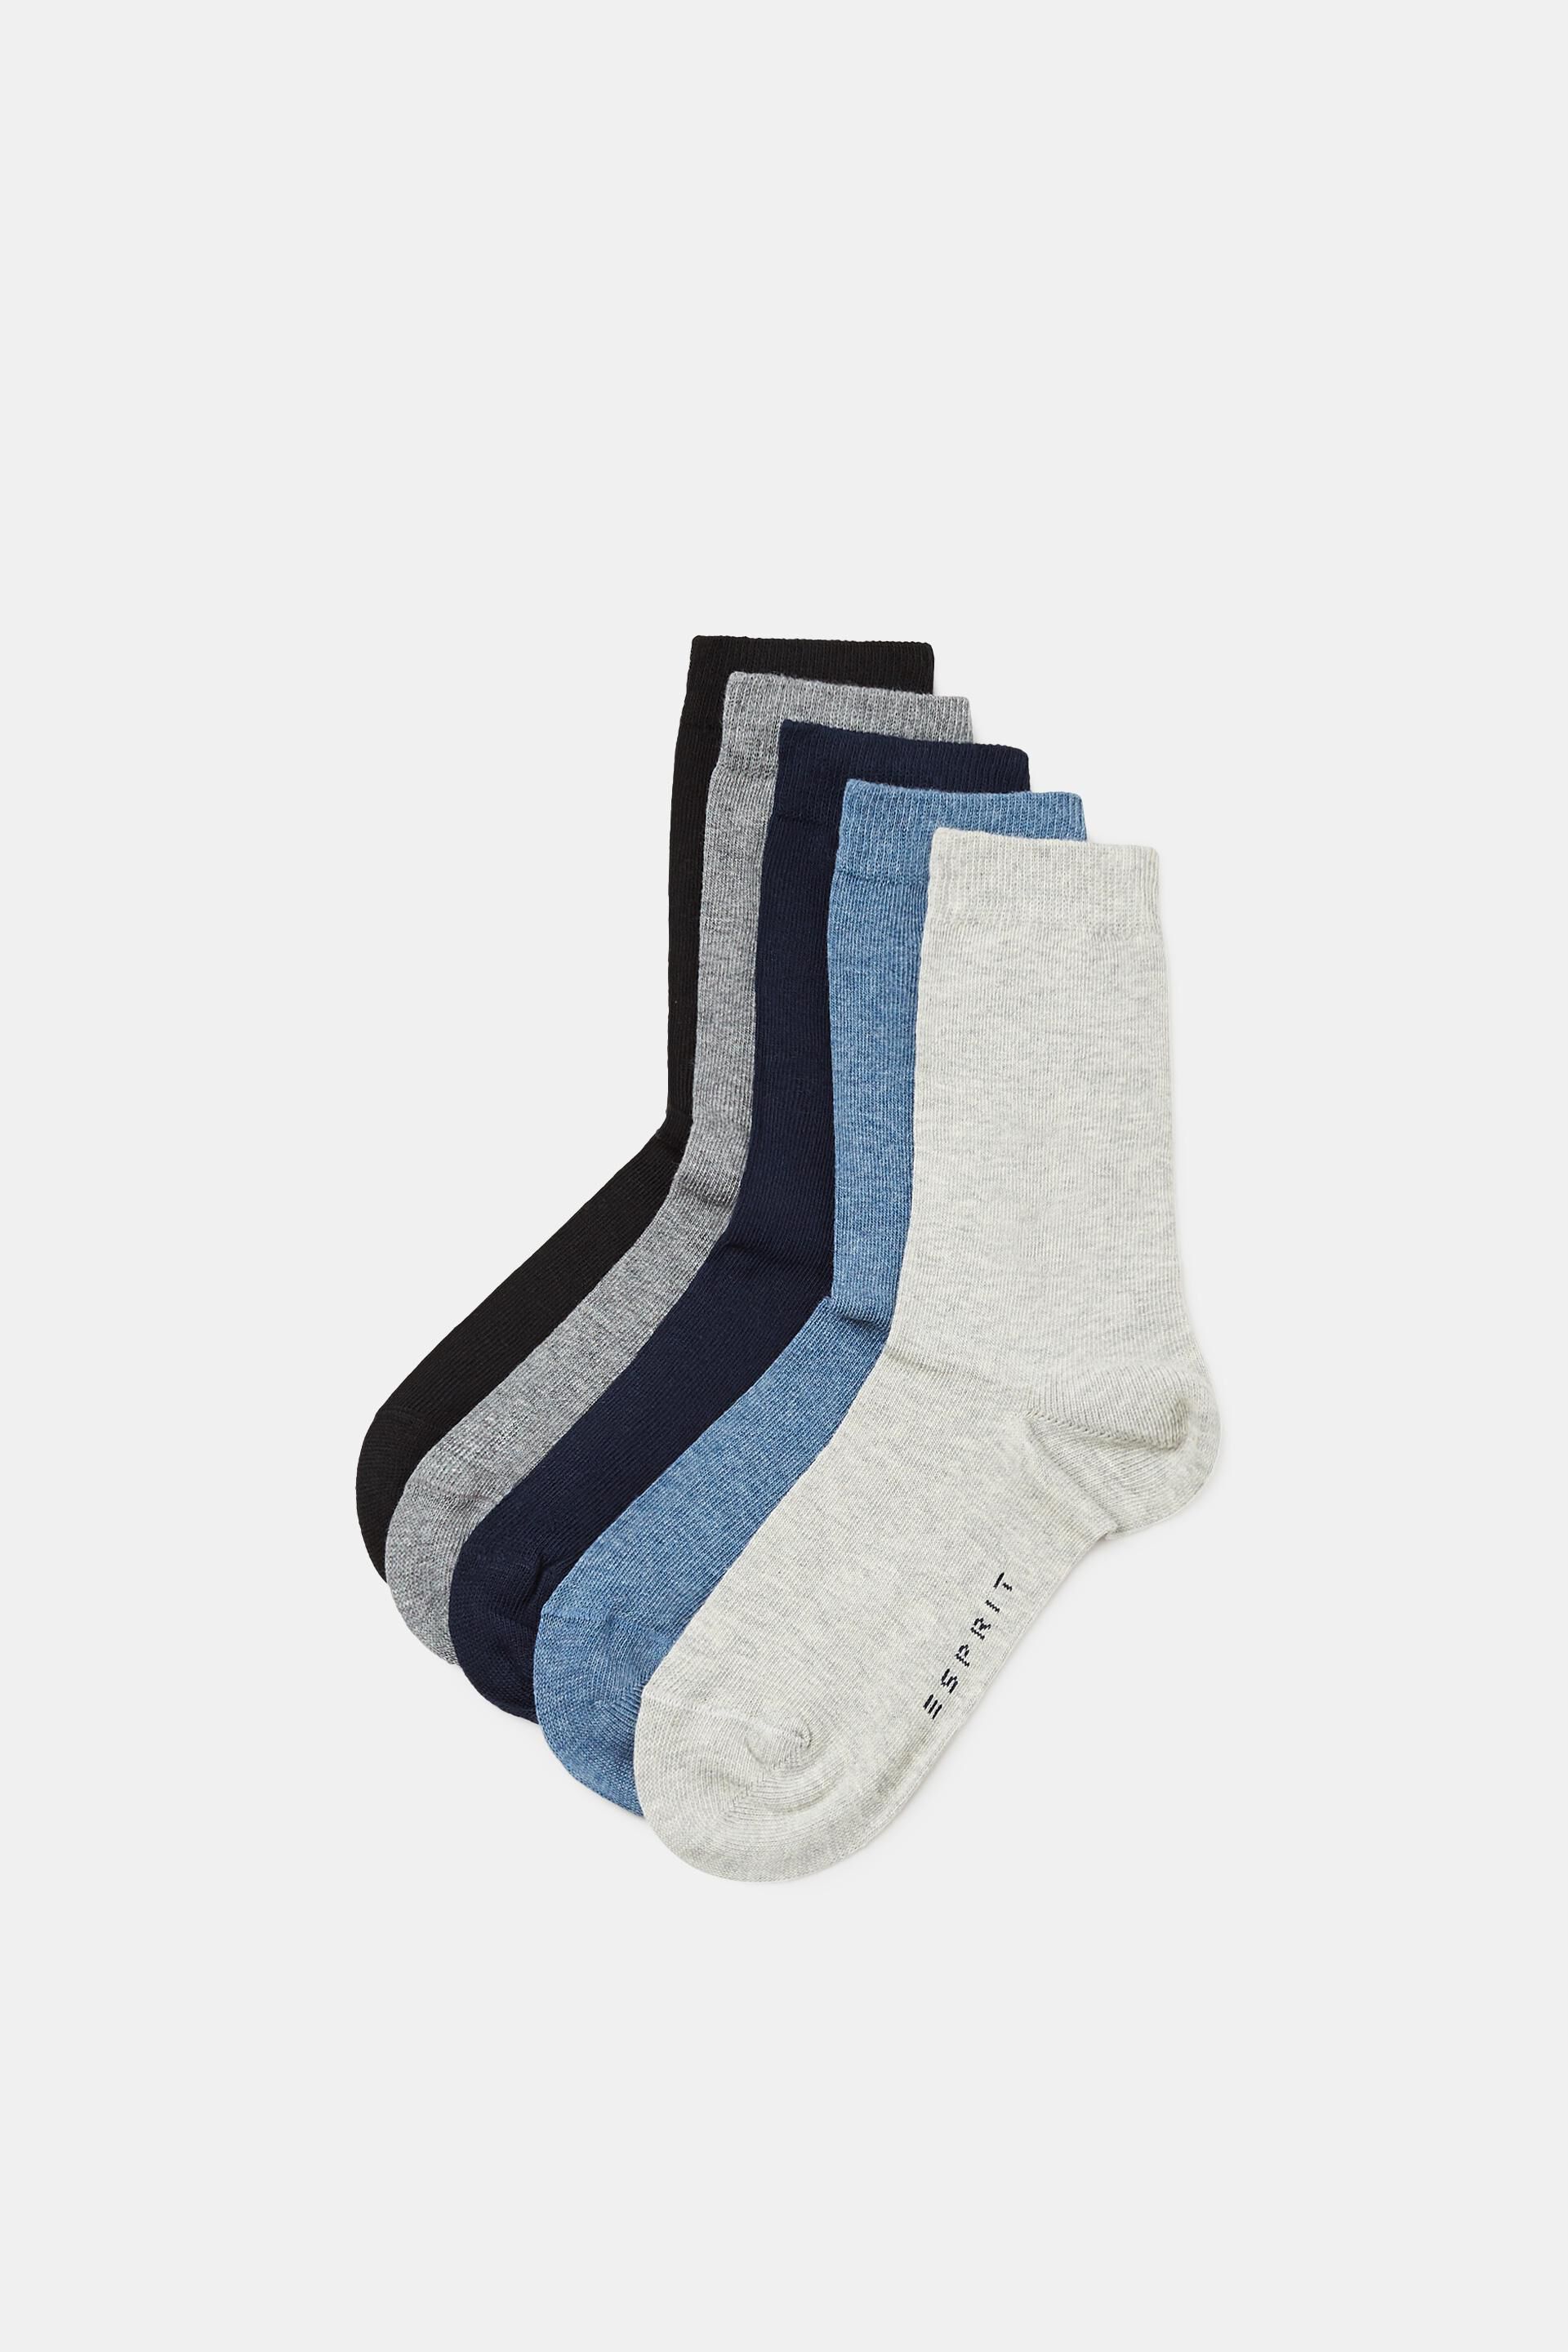 Esprit Teppich Five pack of plain-coloured socks